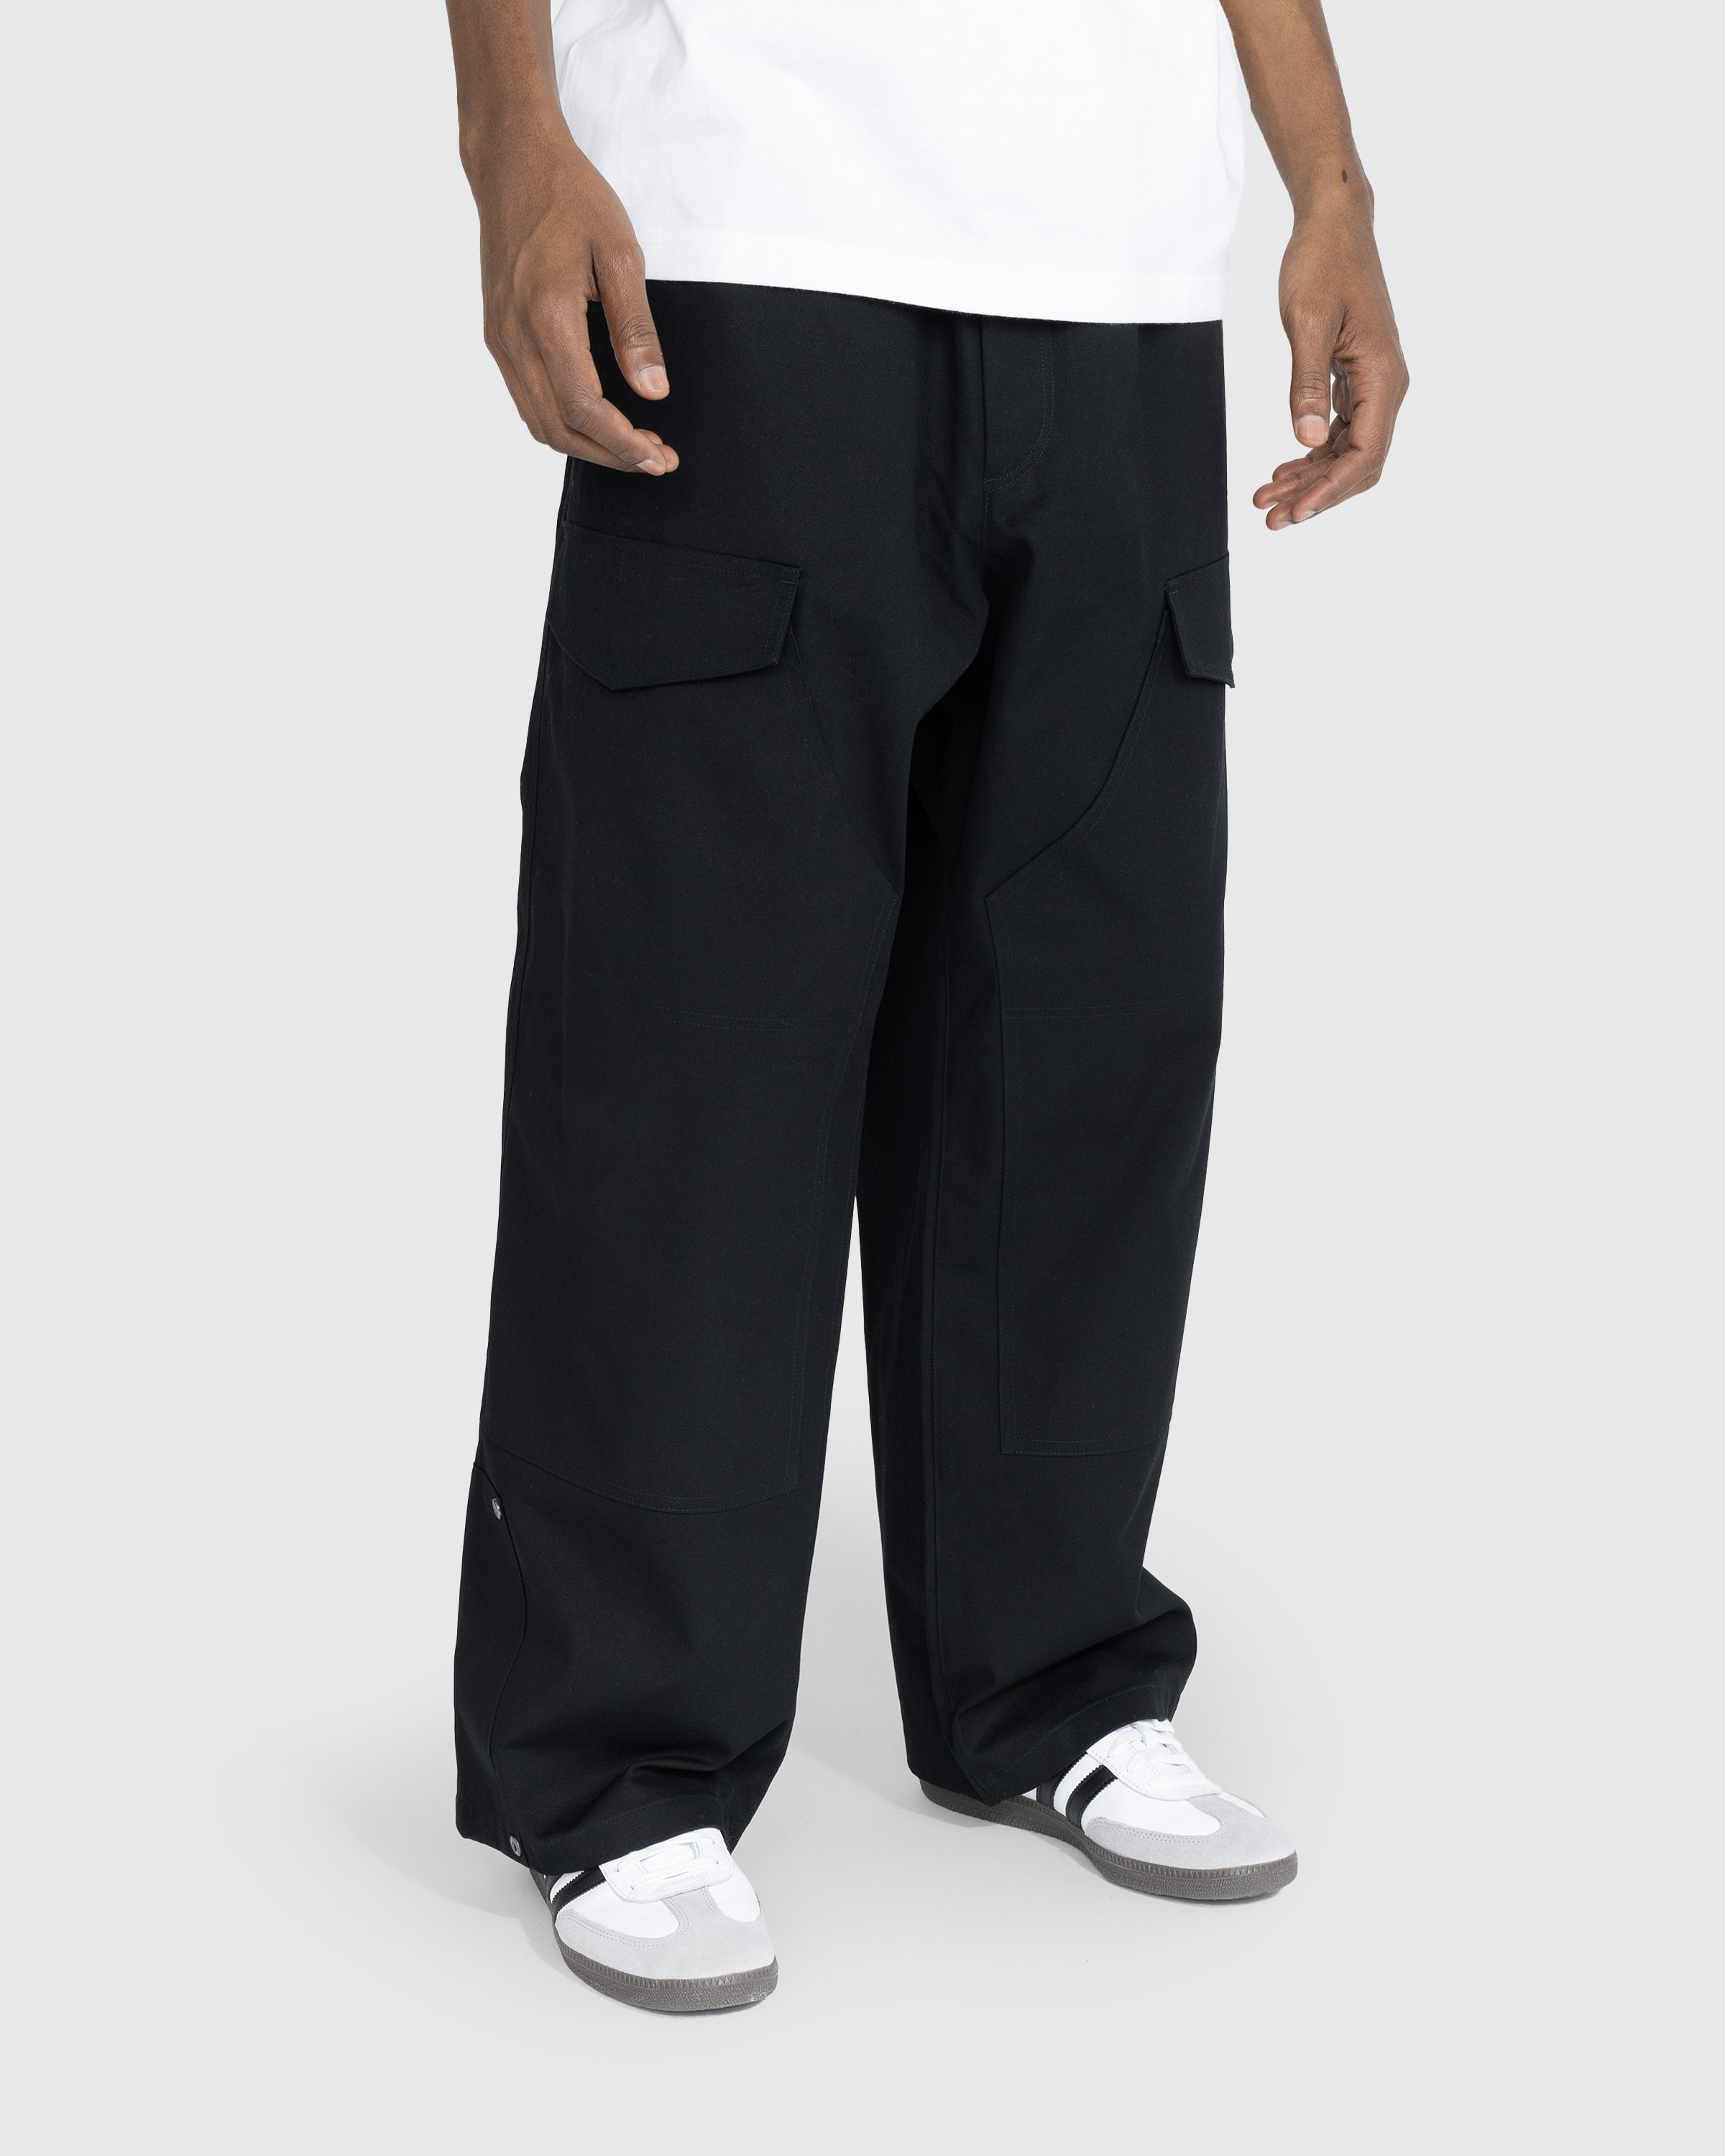 Y-3 - GFX Workwear Pants Black - Clothing - Black - Image 2